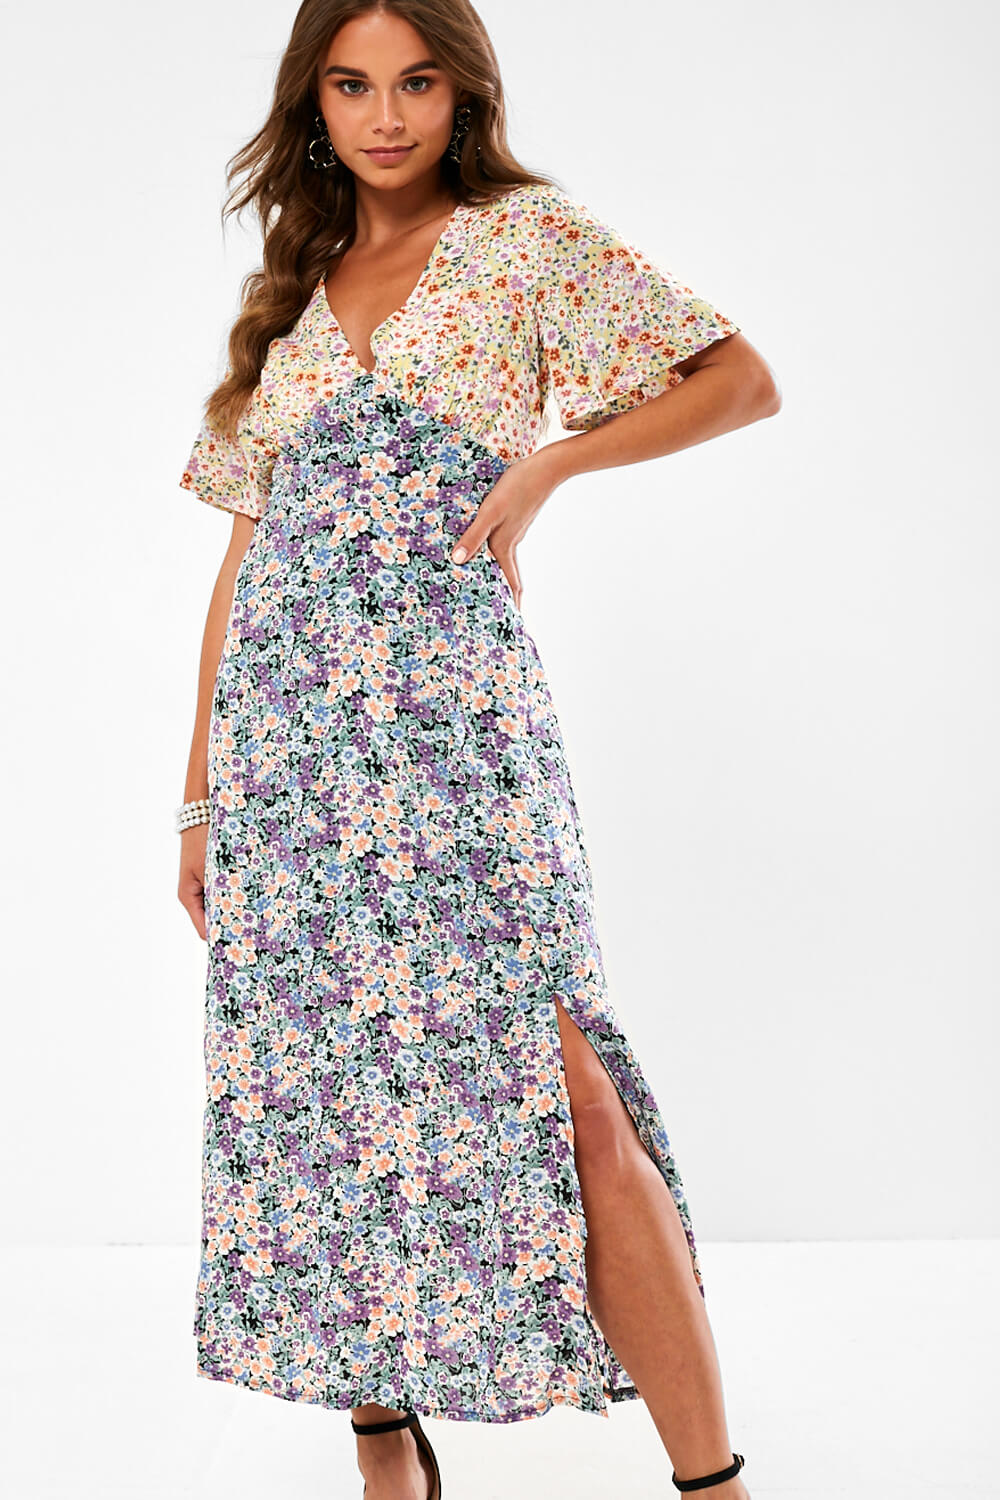 Pixie Daisy Coco Ditsy Floral V Neck Midi Dress | iCLOTHING - iCLOTHING